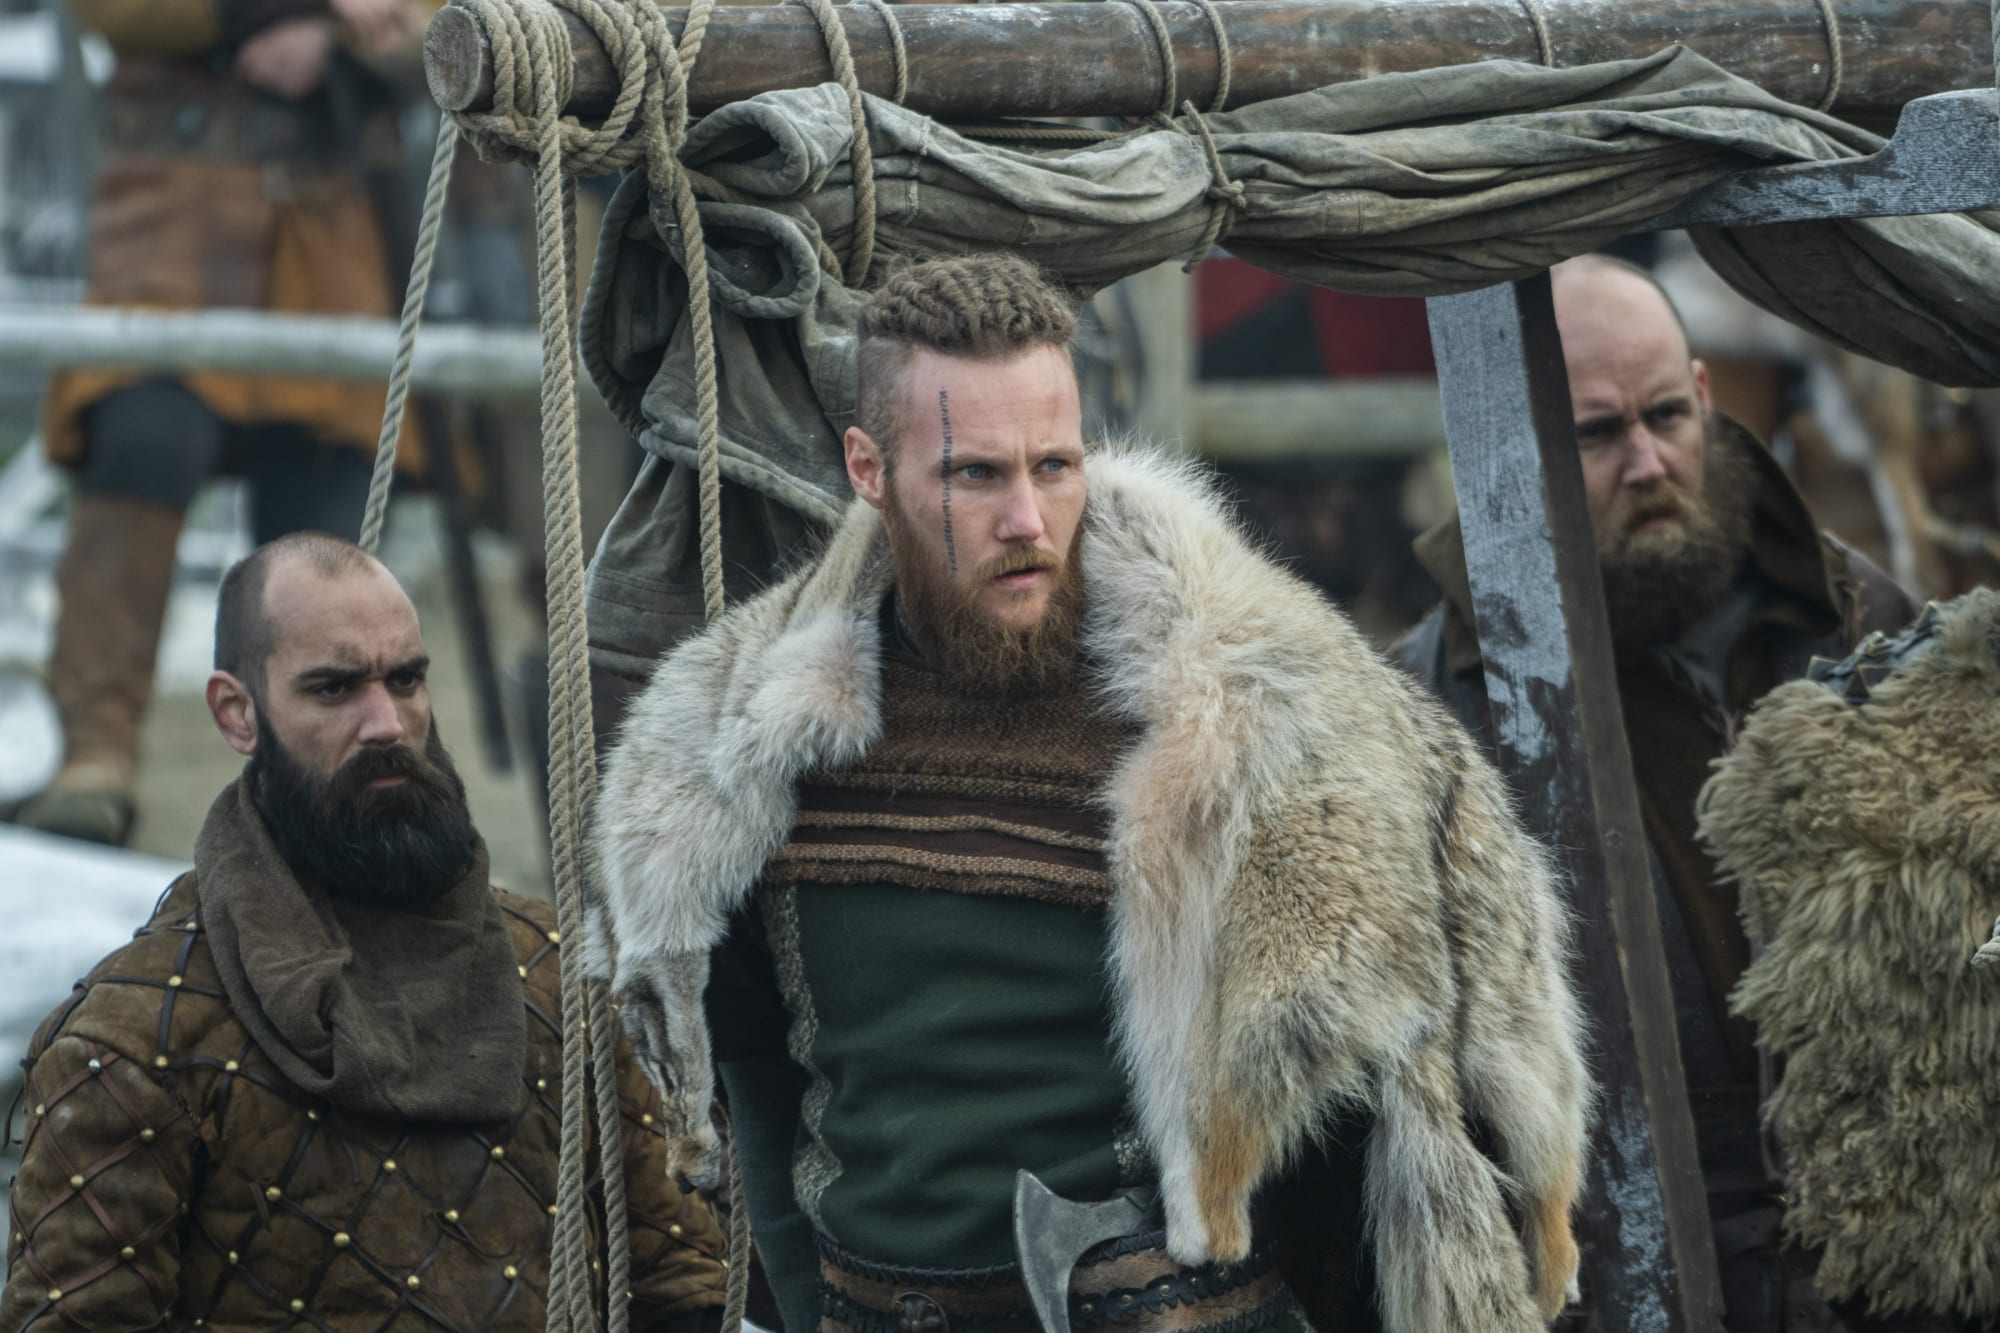 werkwoord Ga naar beneden converteerbaar Vikings Season 6, Part 2 DVD release date set for March 2022